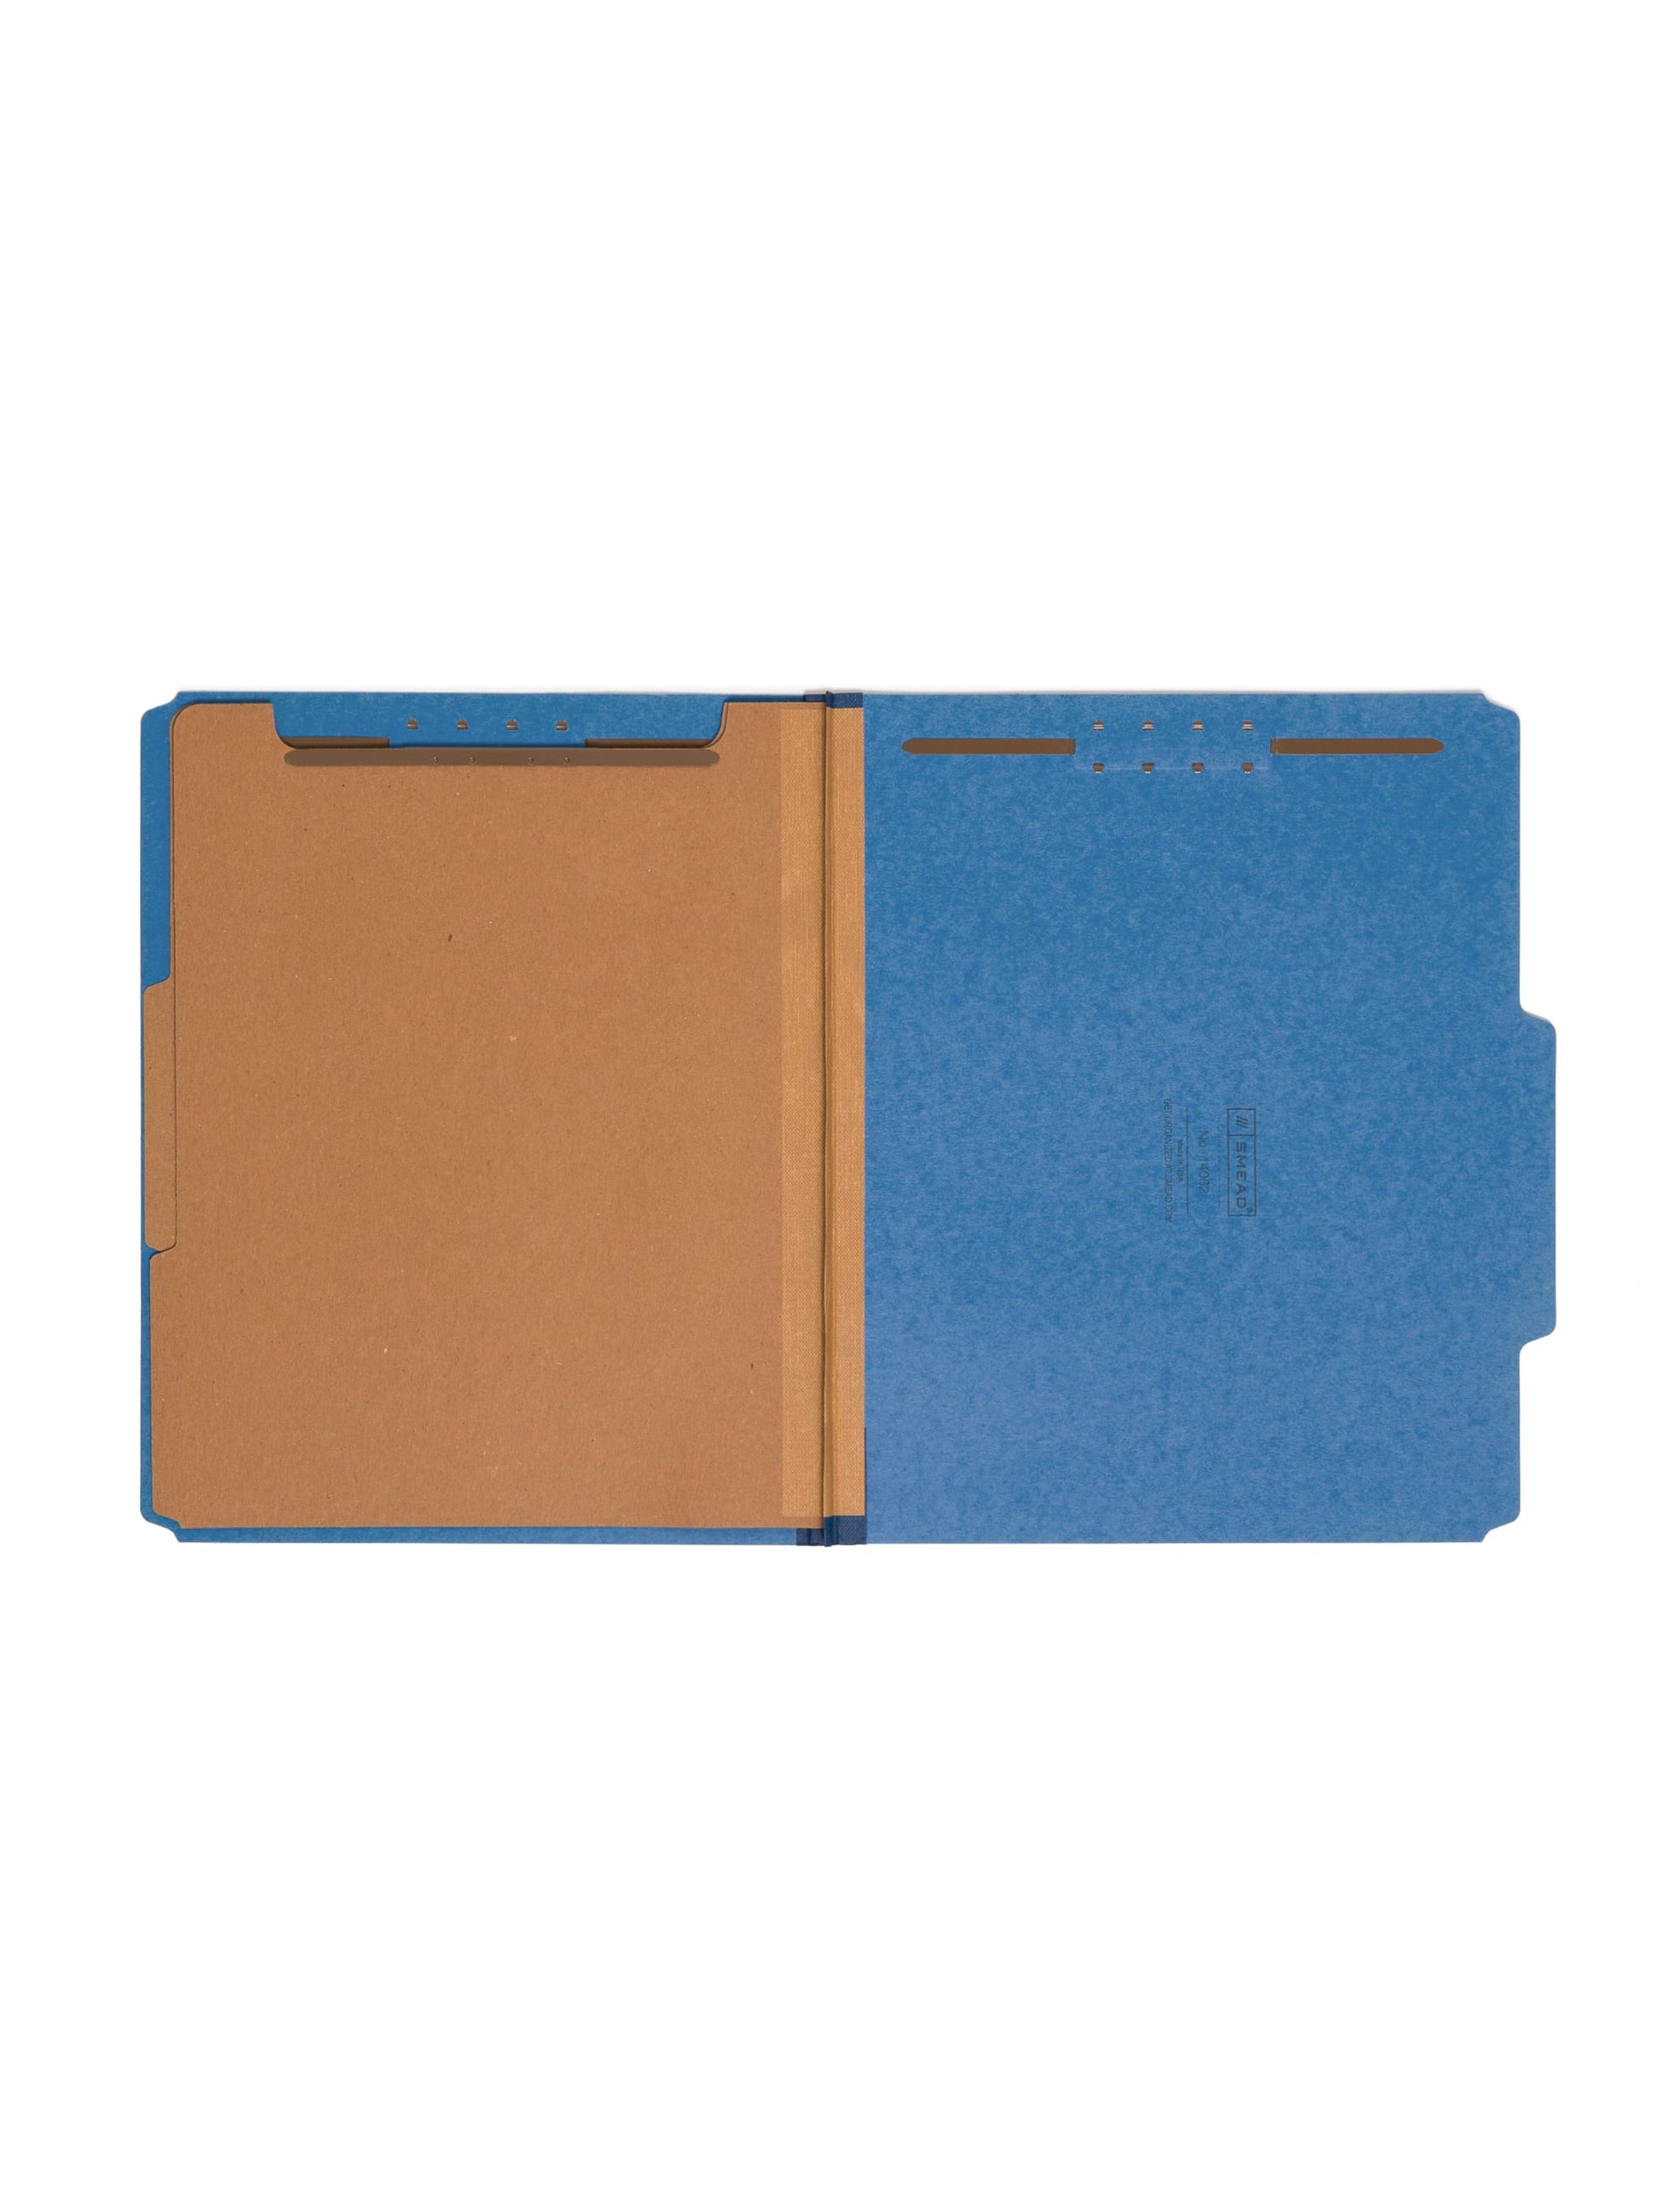 Pressboard Classification File Folders, 2 Dividers, 2 inch Expansion, Dark Blue Color, Letter Size, Set of 0, 30086486140622